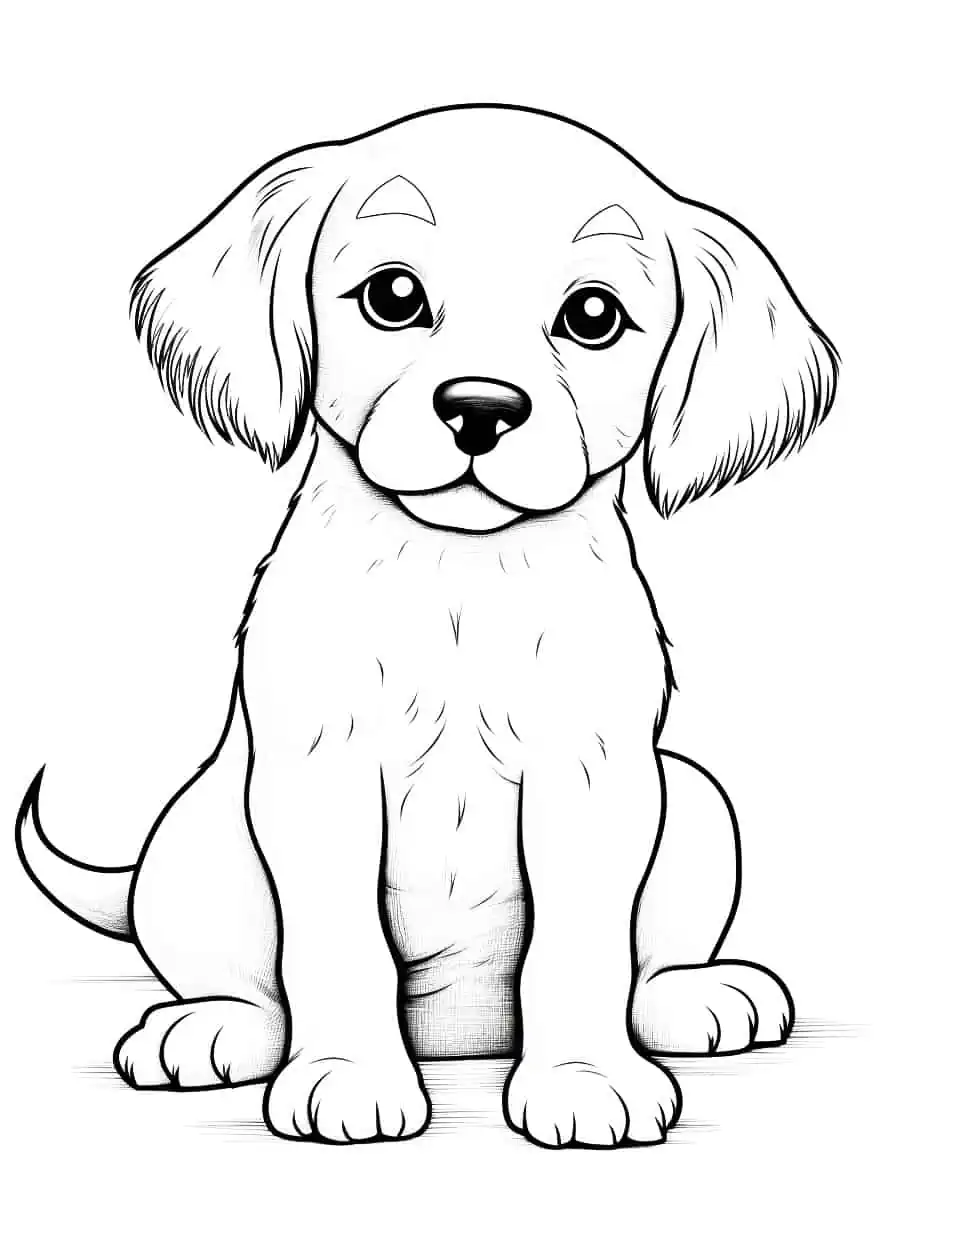 Easy Golden Retriever Outline Dog Coloring Page - An easy-to-color outline of a Golden Retriever puppy.